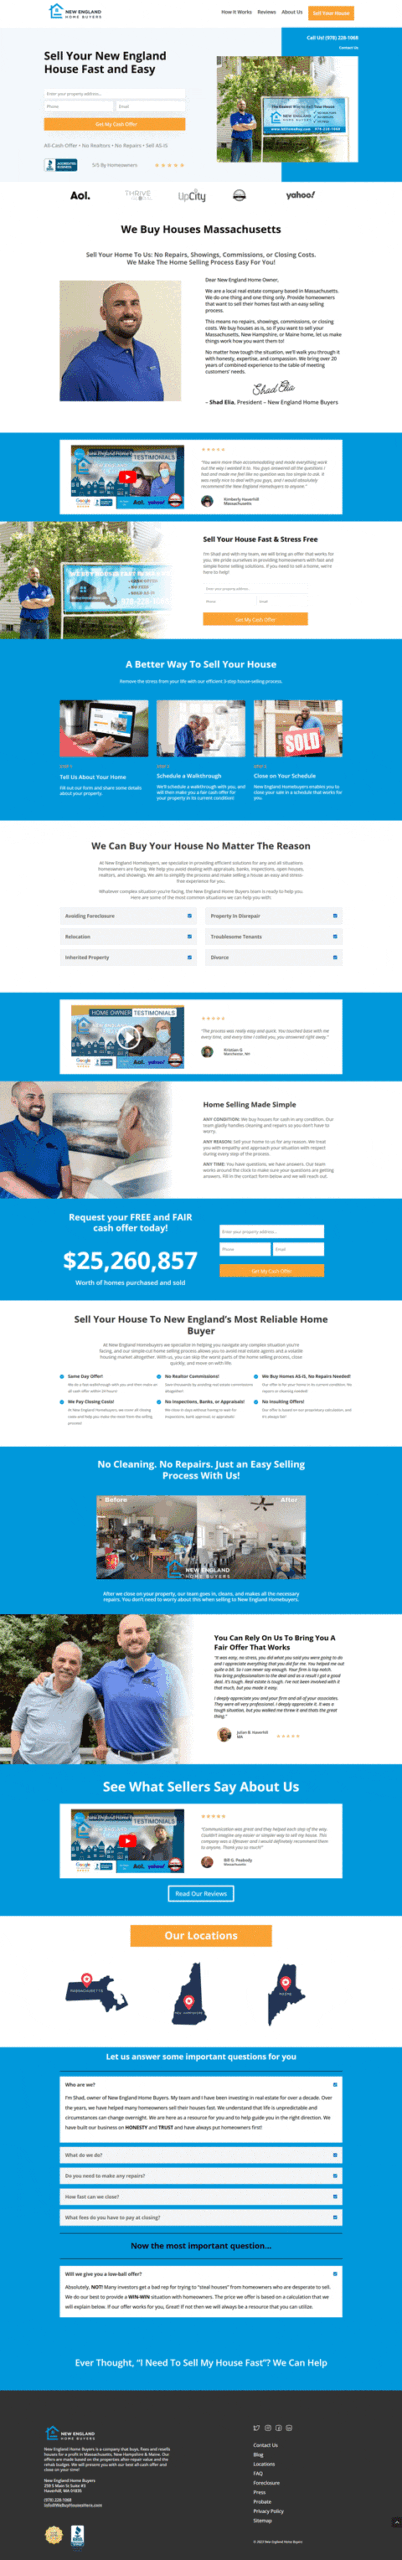 New England Home Buyers - Homepage Image